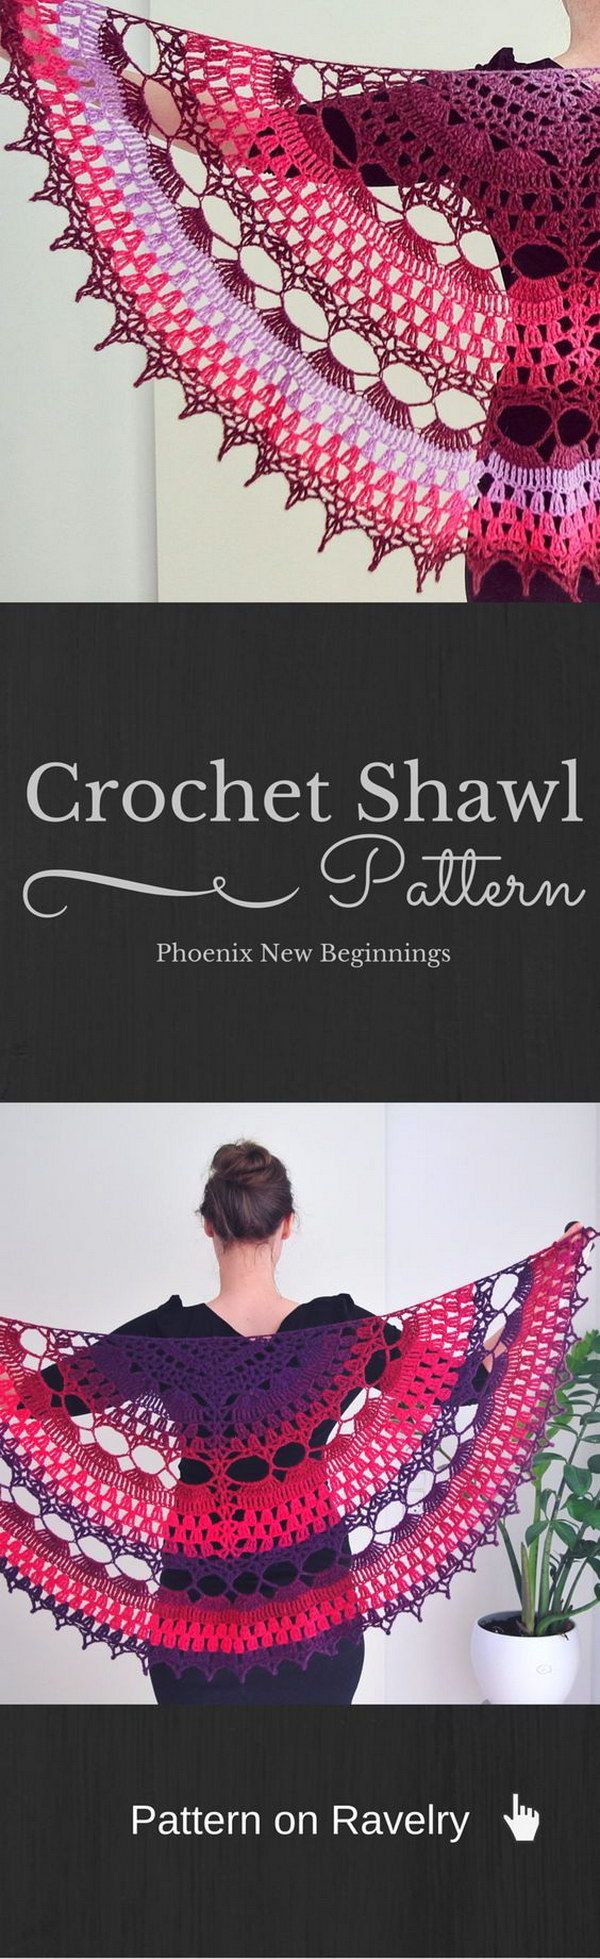 30-Great-Crochet-Shawl-Patterns.jpg